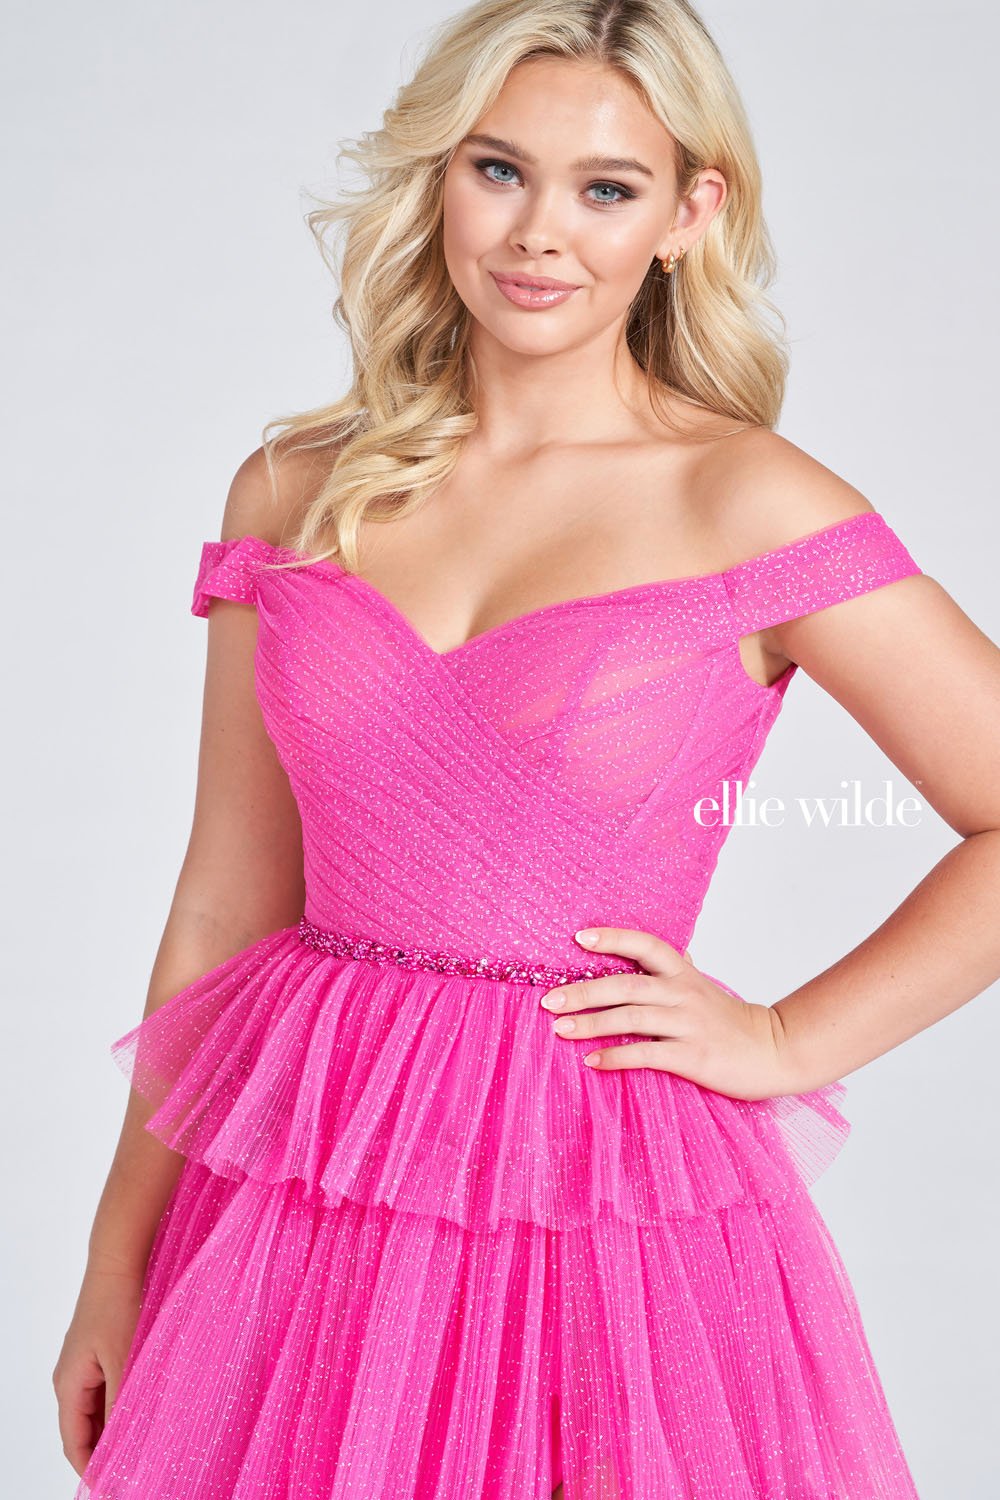 Ellie Wilde Hot Pink EW122060 Prom Dress Image.  Hot Pink formal dress.